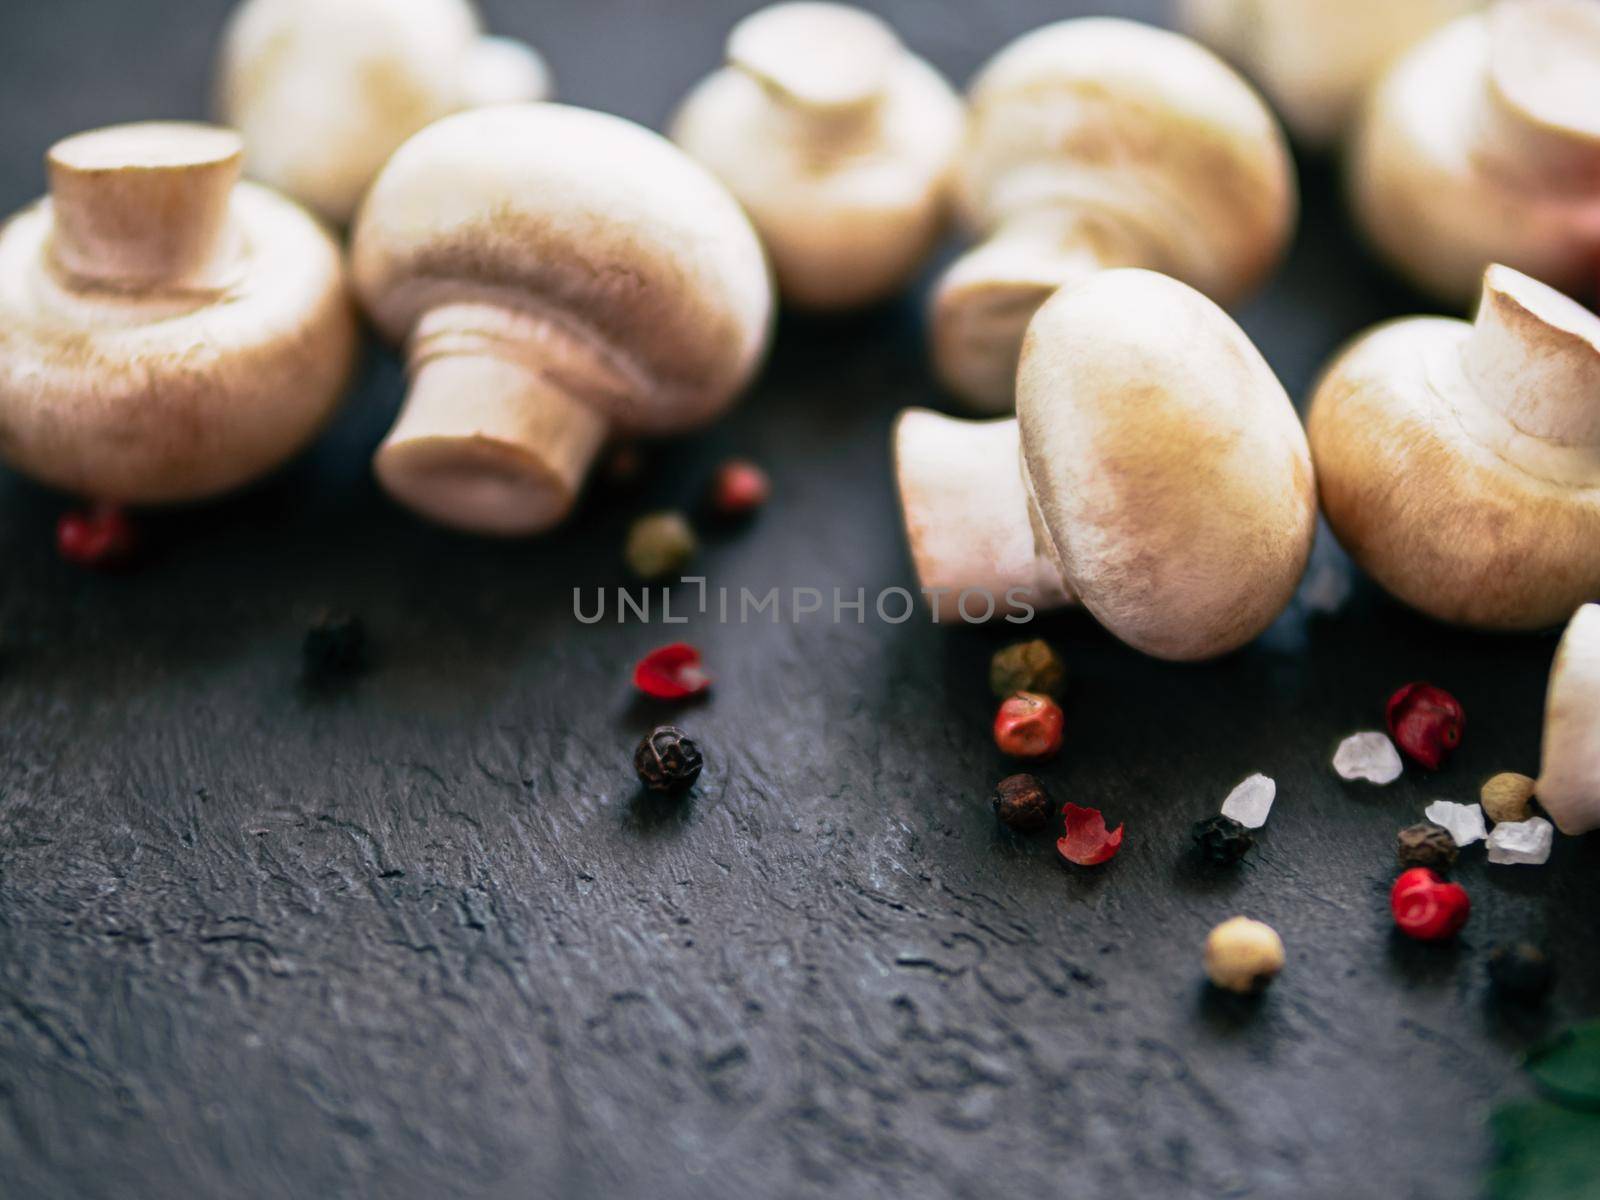 Mini champignons on black background, copy space by fascinadora